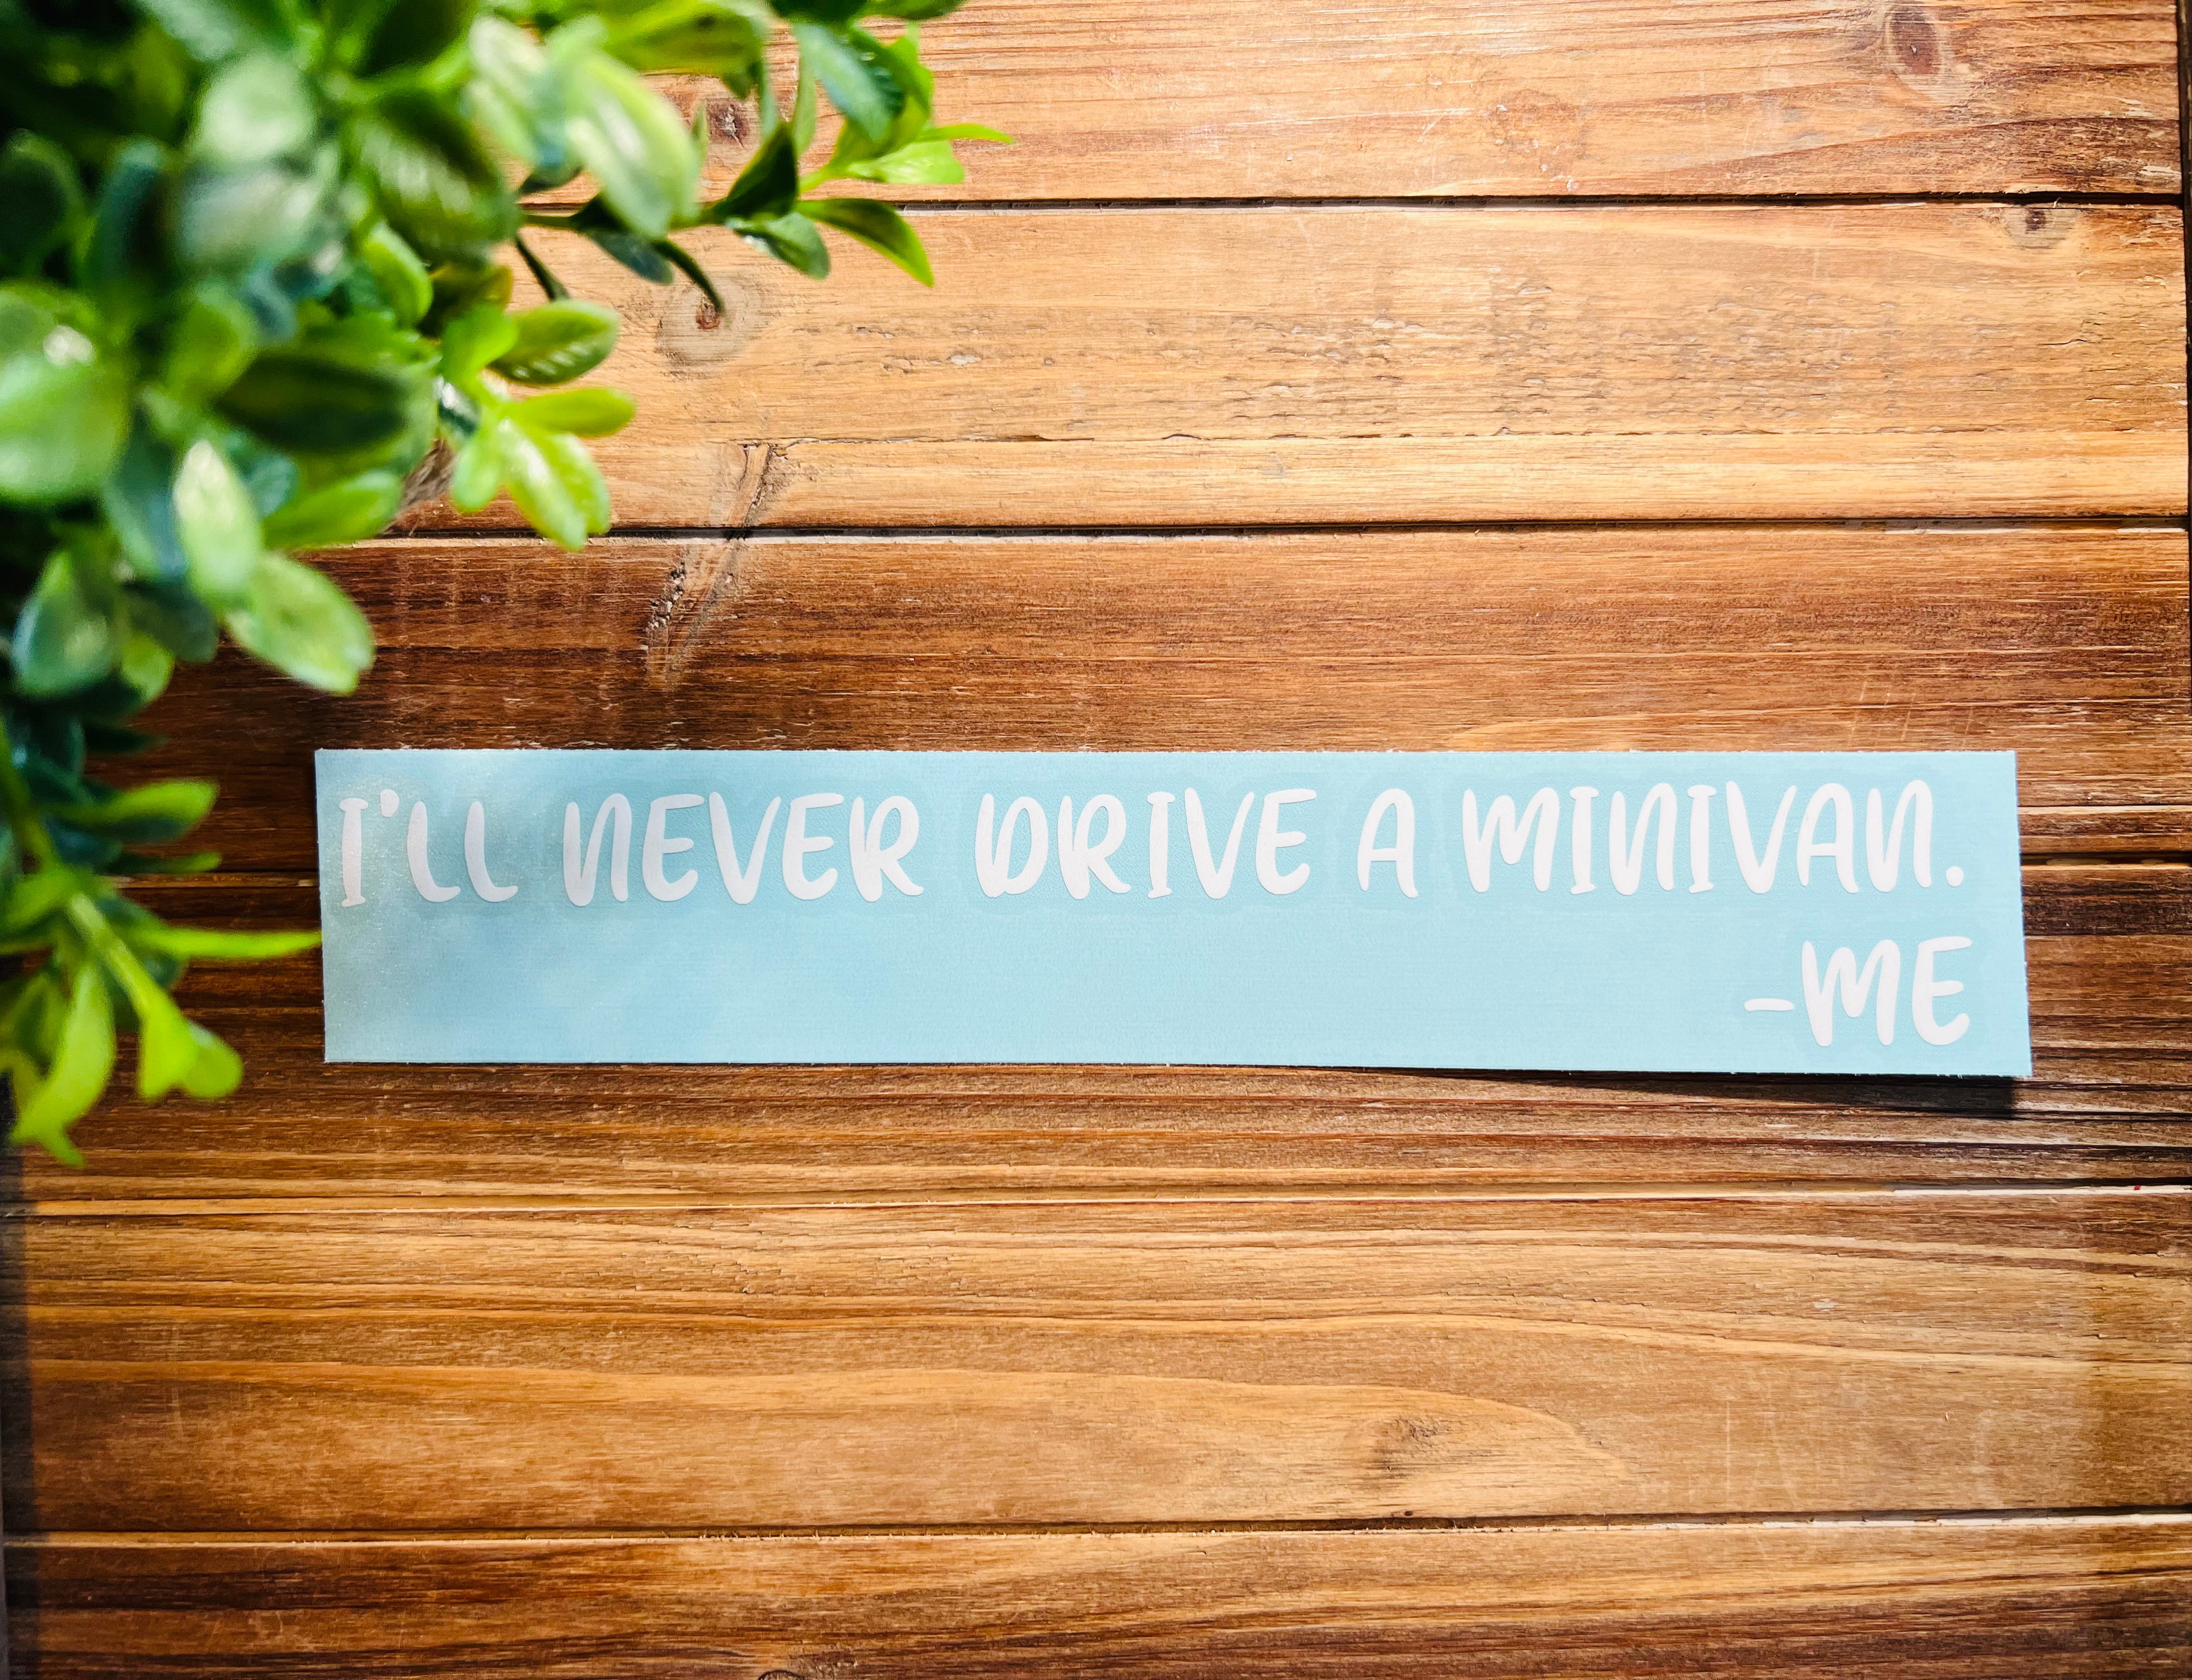 I'll Never Drive a Minivan says ME Decal